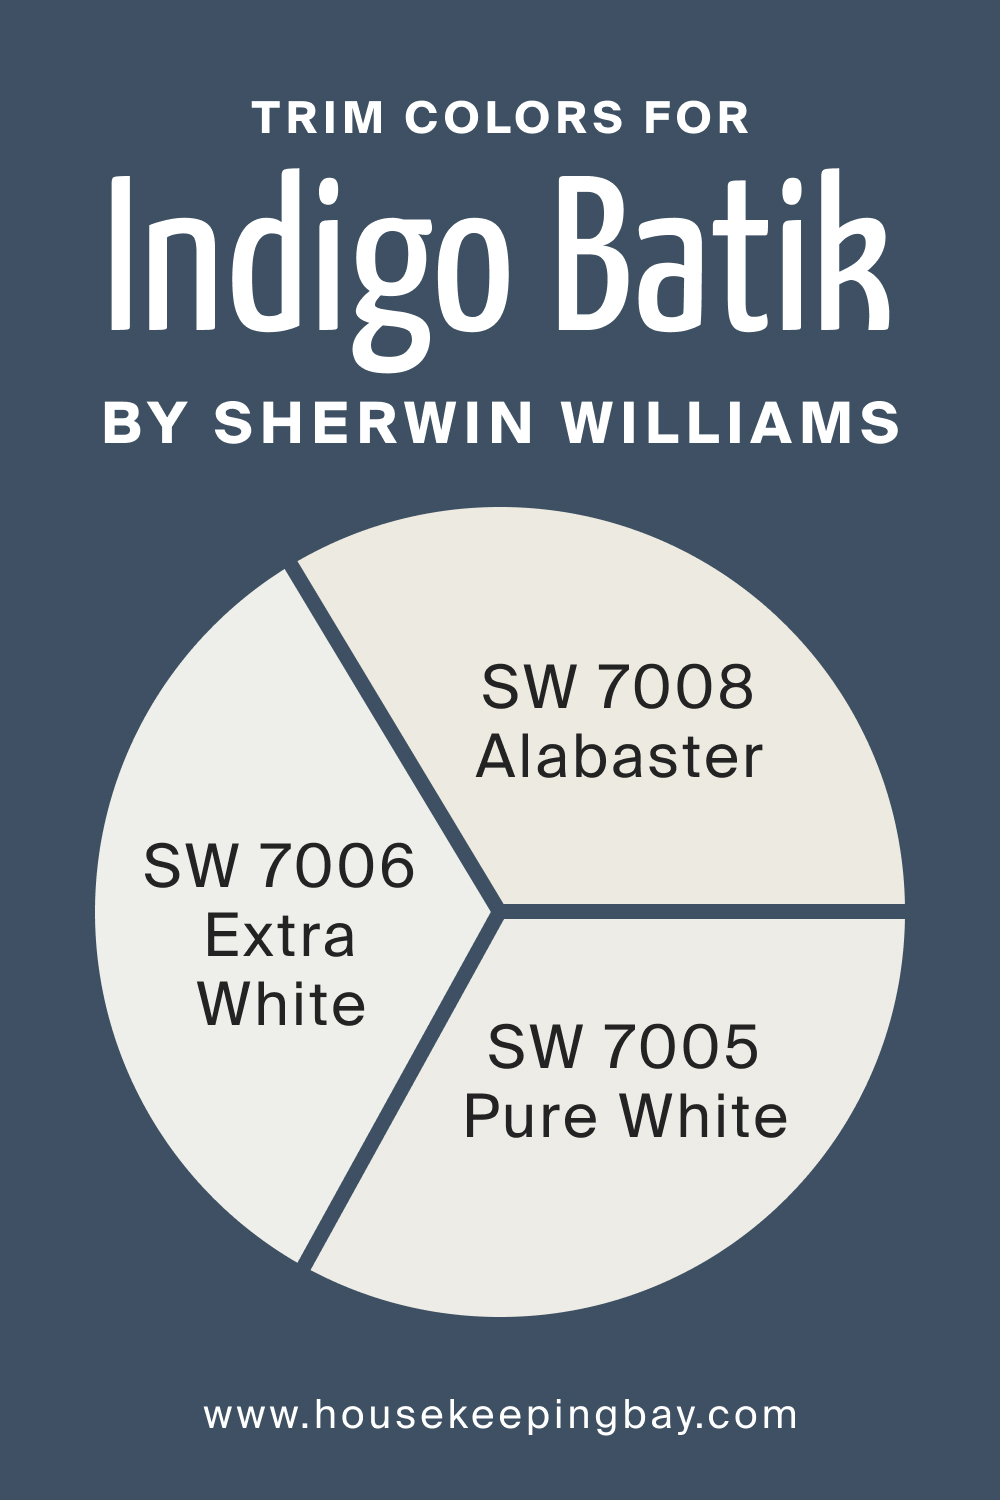 Trim Colors of SW 7602 Indigo Batik by Sherwin Williams